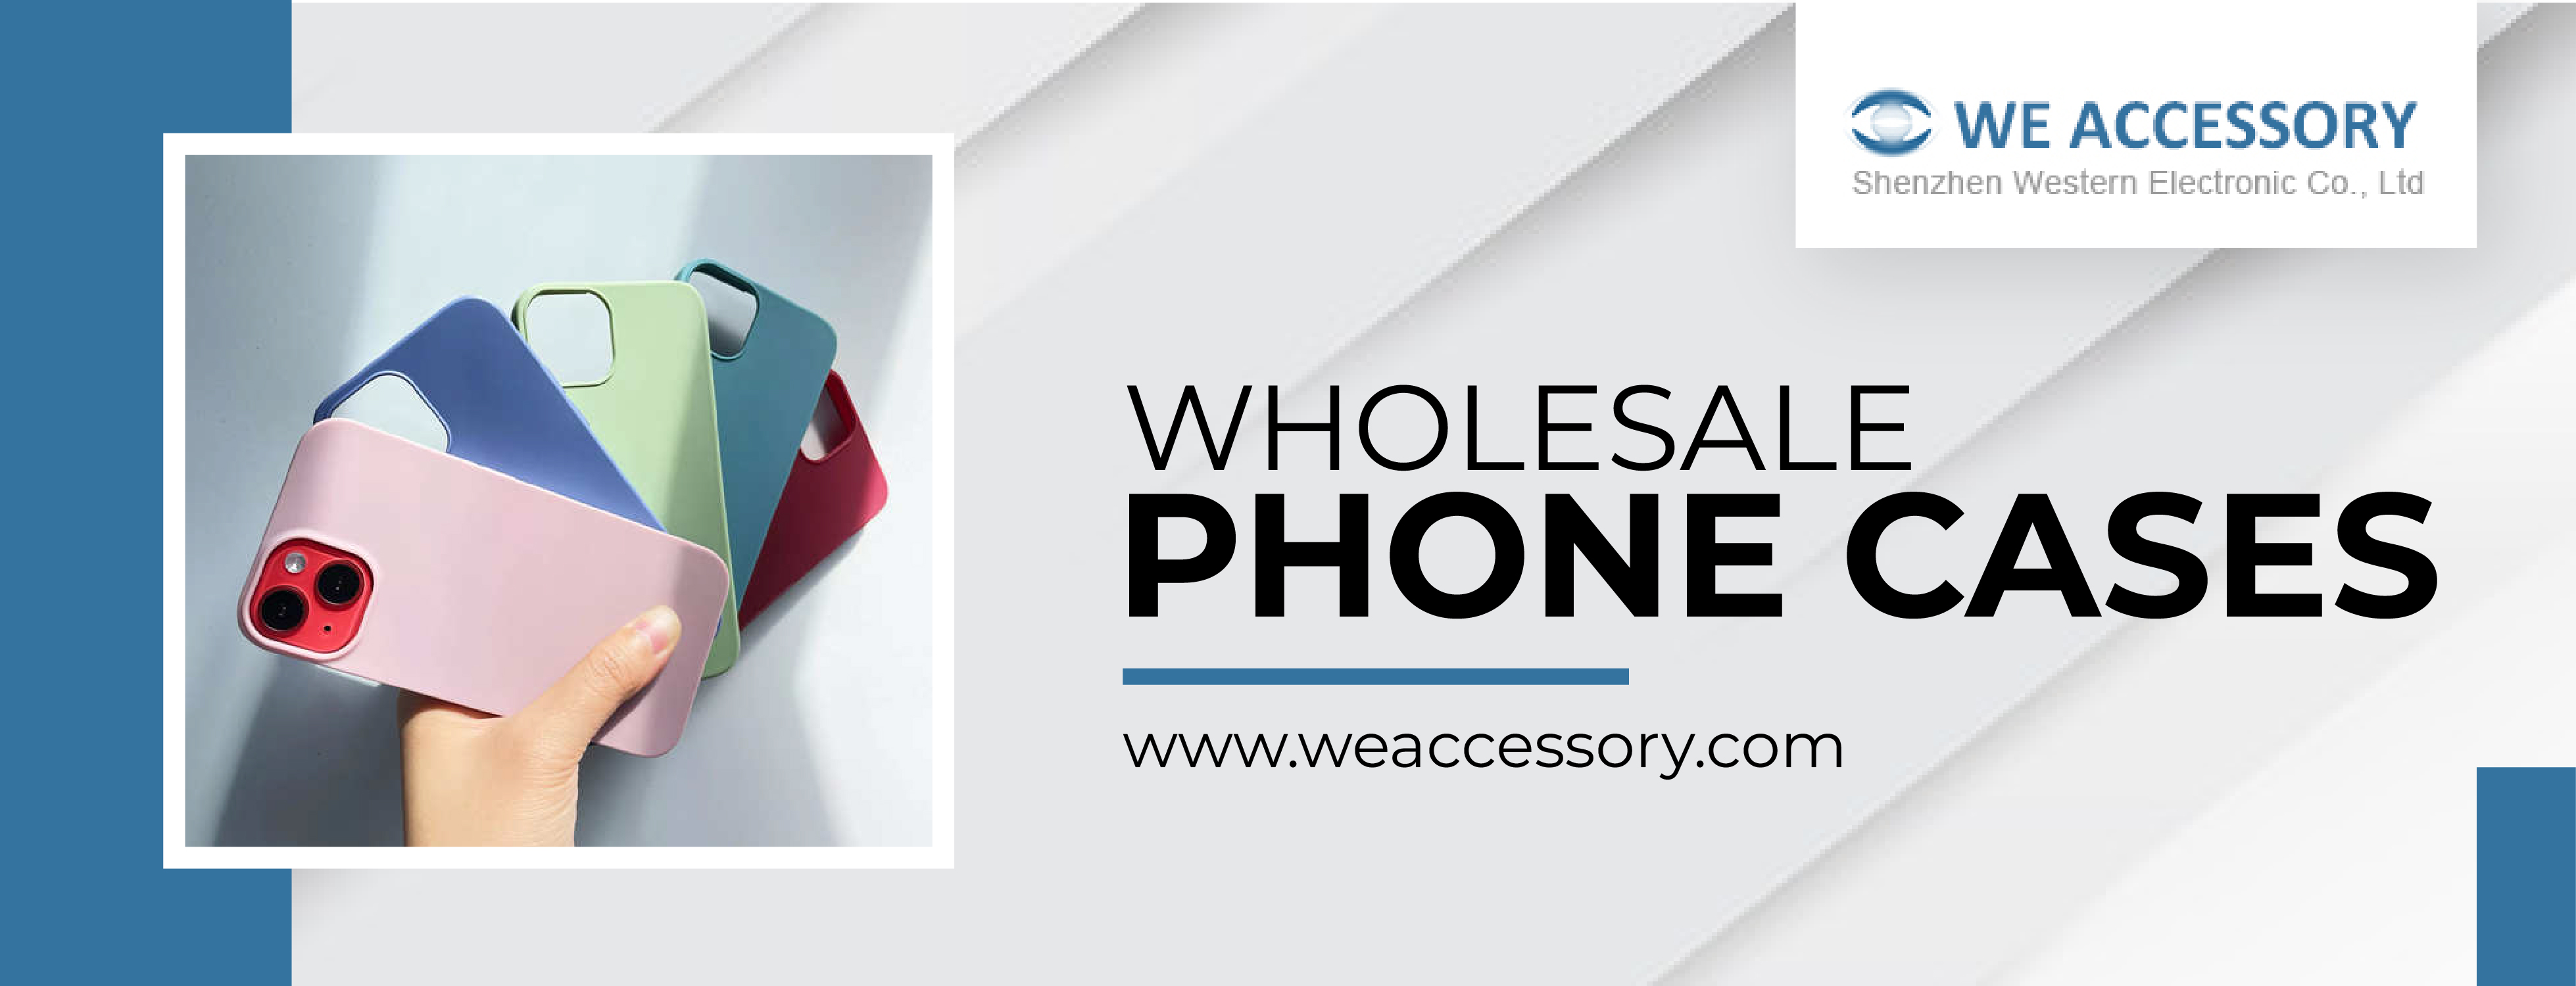 wholesale phone cases